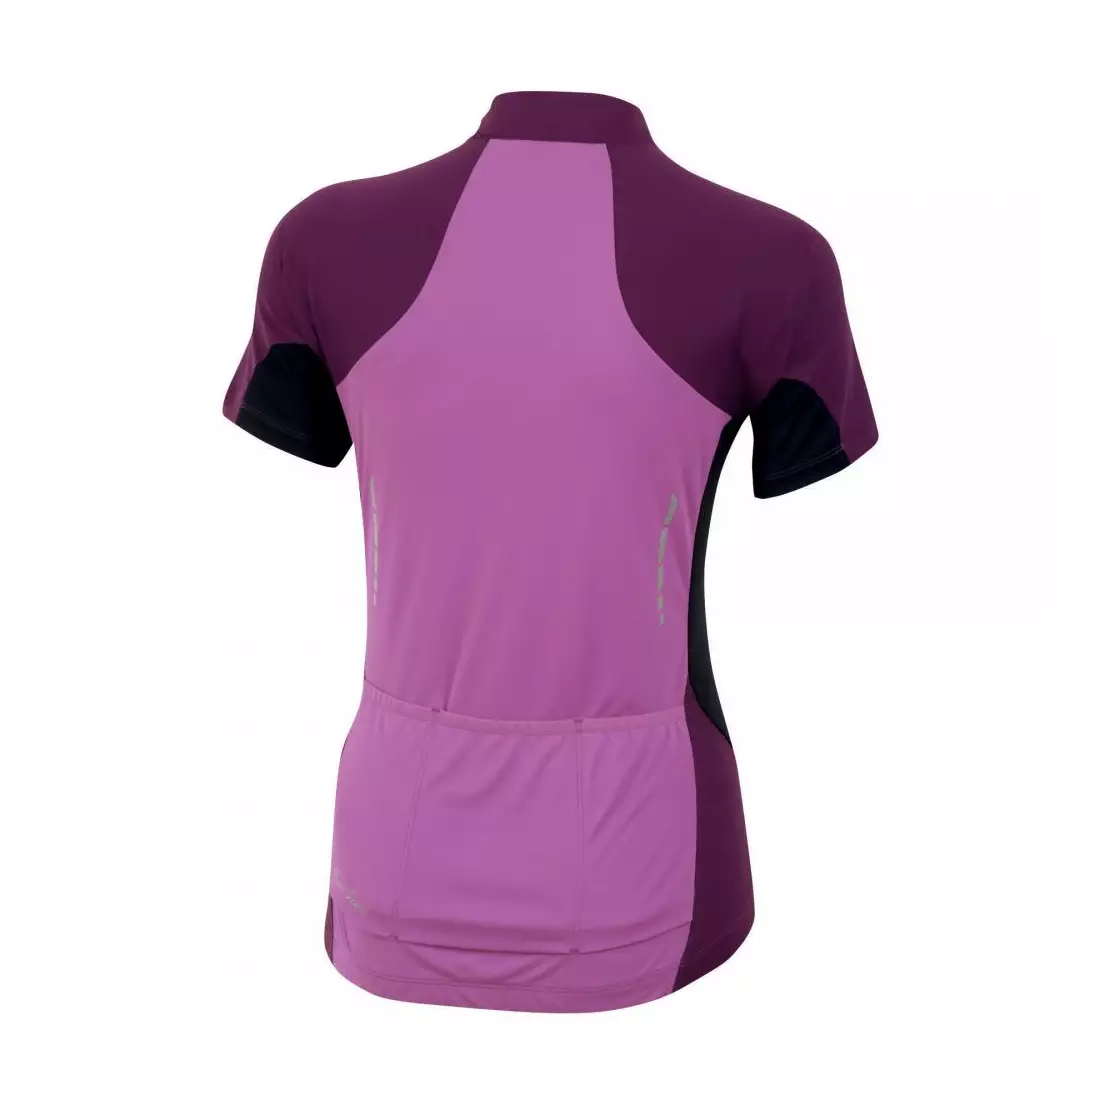 PEARL IZUMI SYMPHONY women's cycling jersey 11221305-4LS